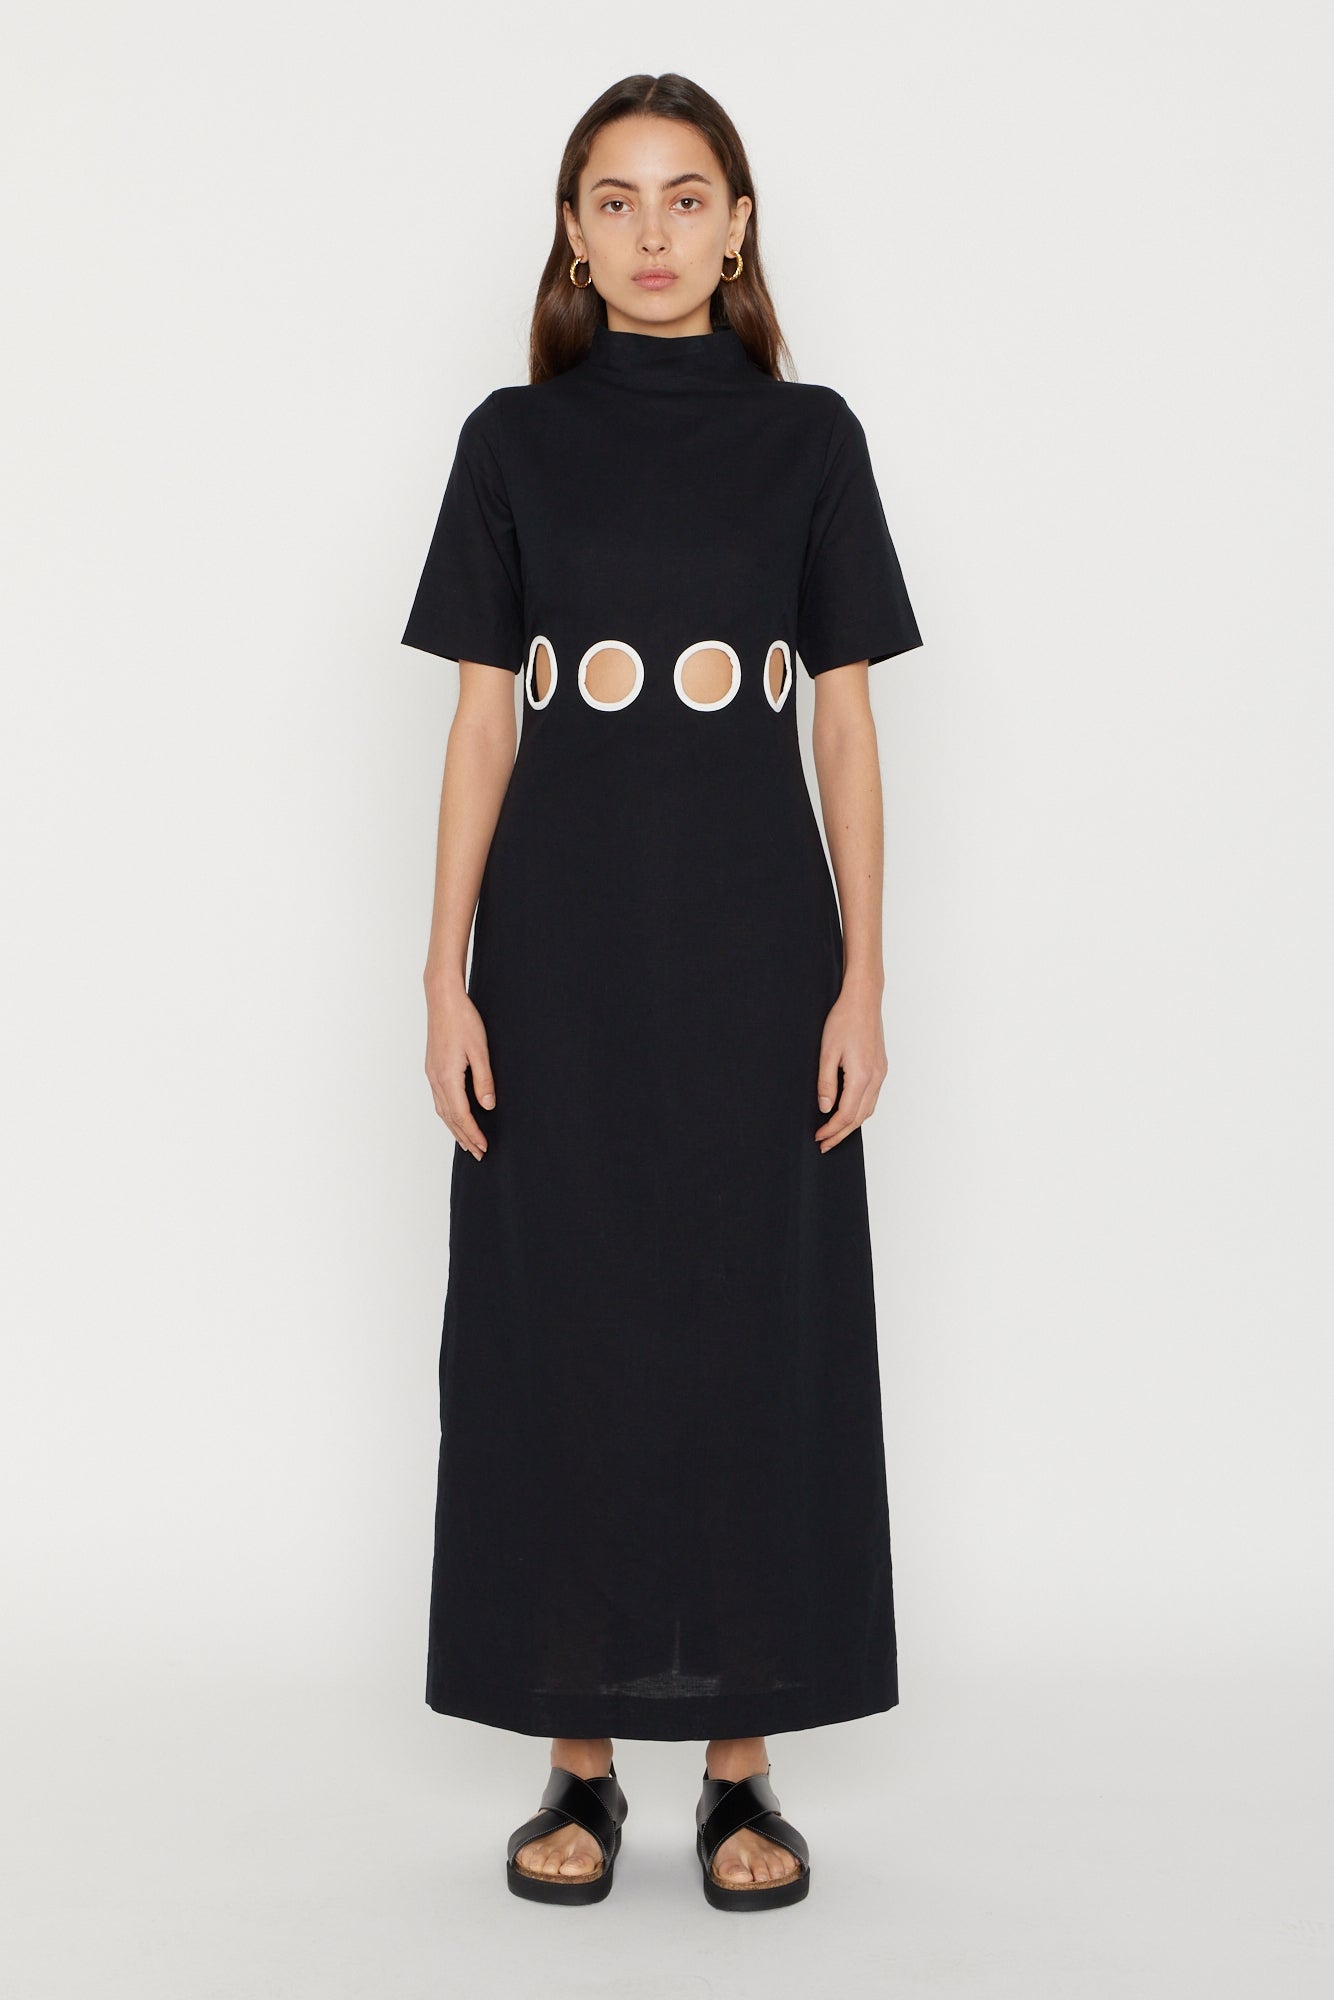 Black Maxi Dress with Circular Cutouts